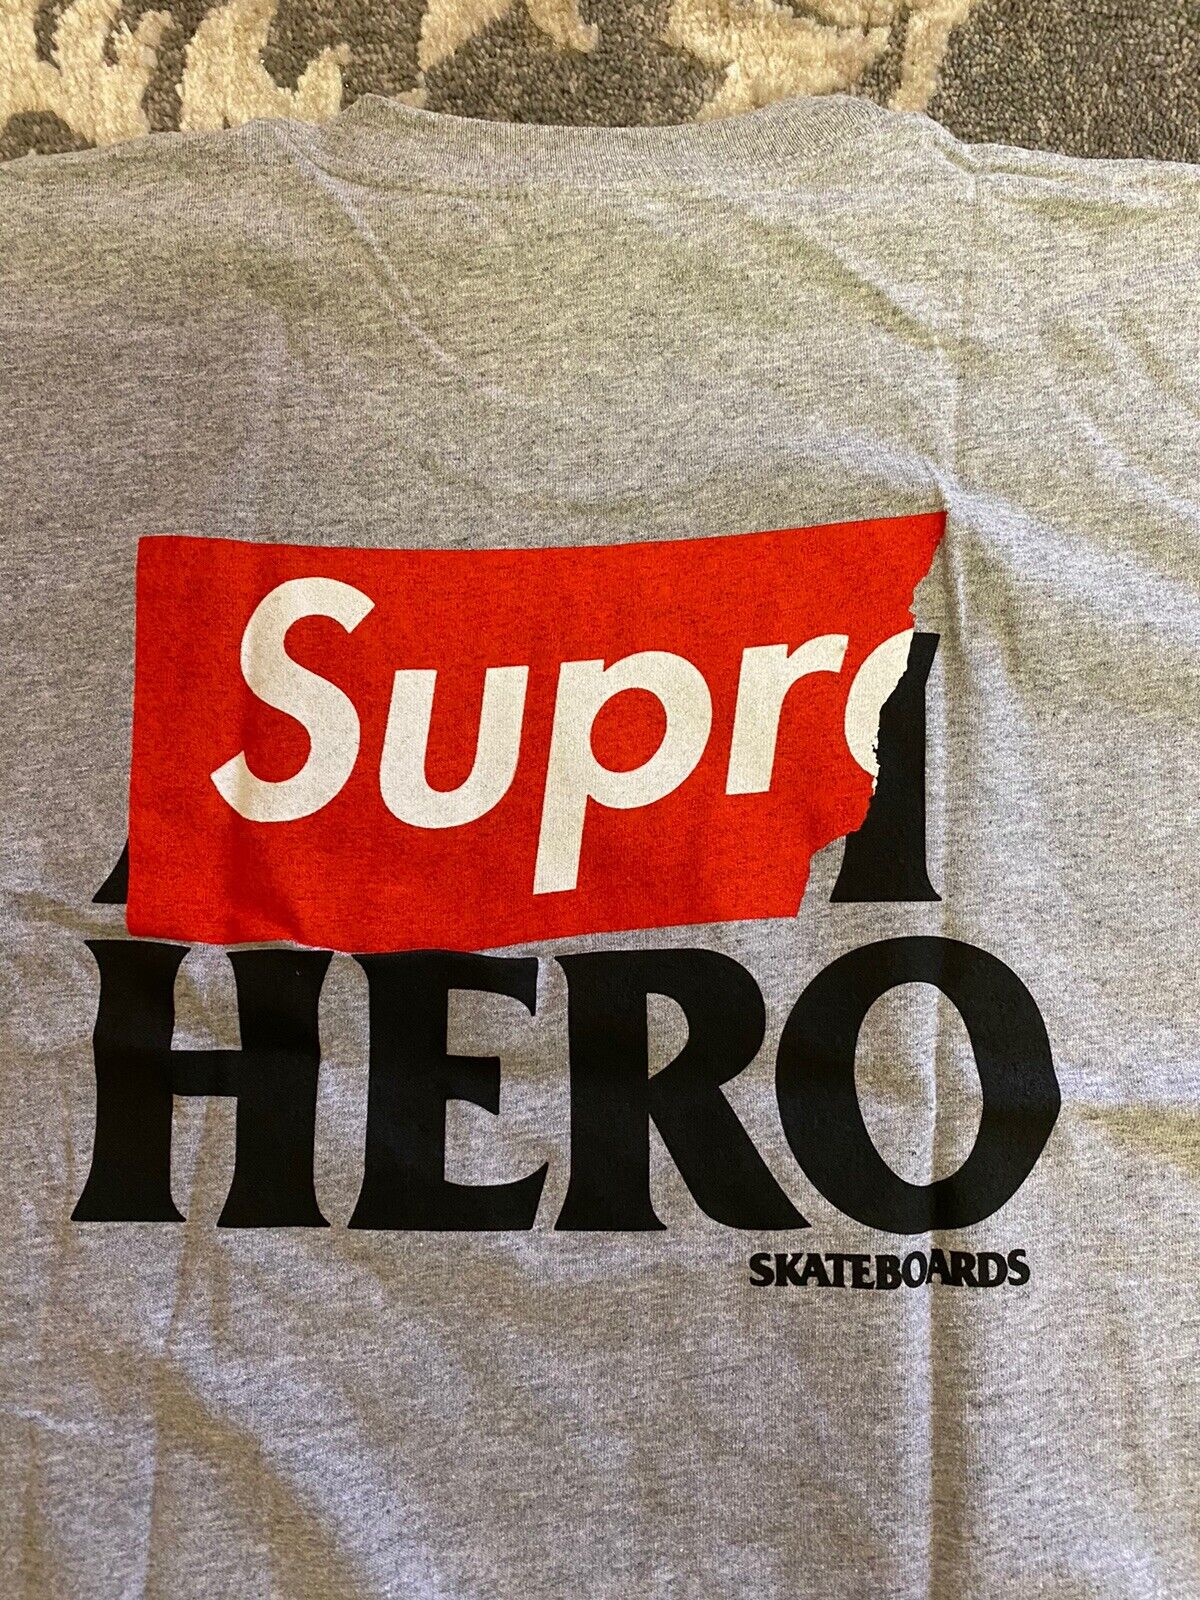 Supreme Anti Hero Pocket Tee T Shirt Grey Mens Sz Large S/S 2014 